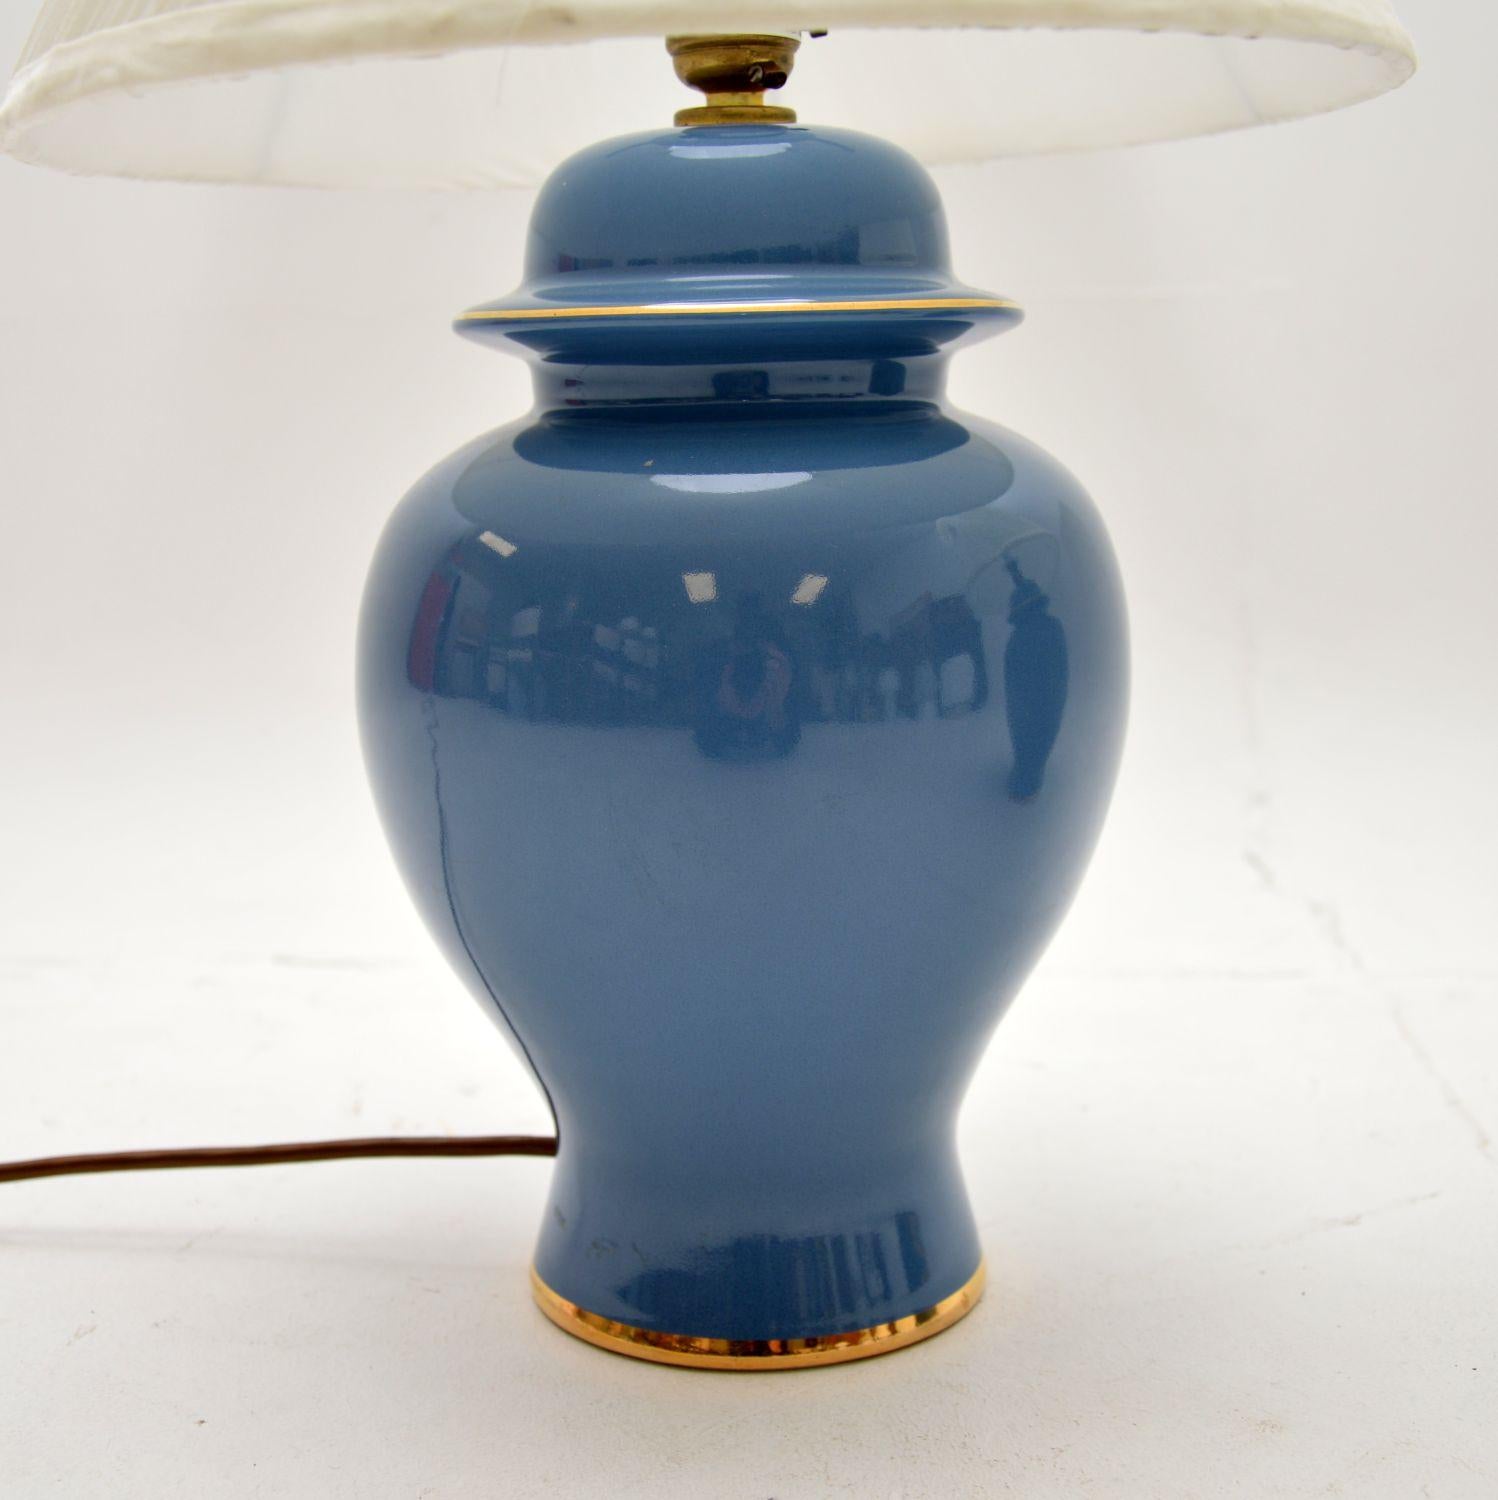 British Pair of Vintage Ceramic Table Lamps